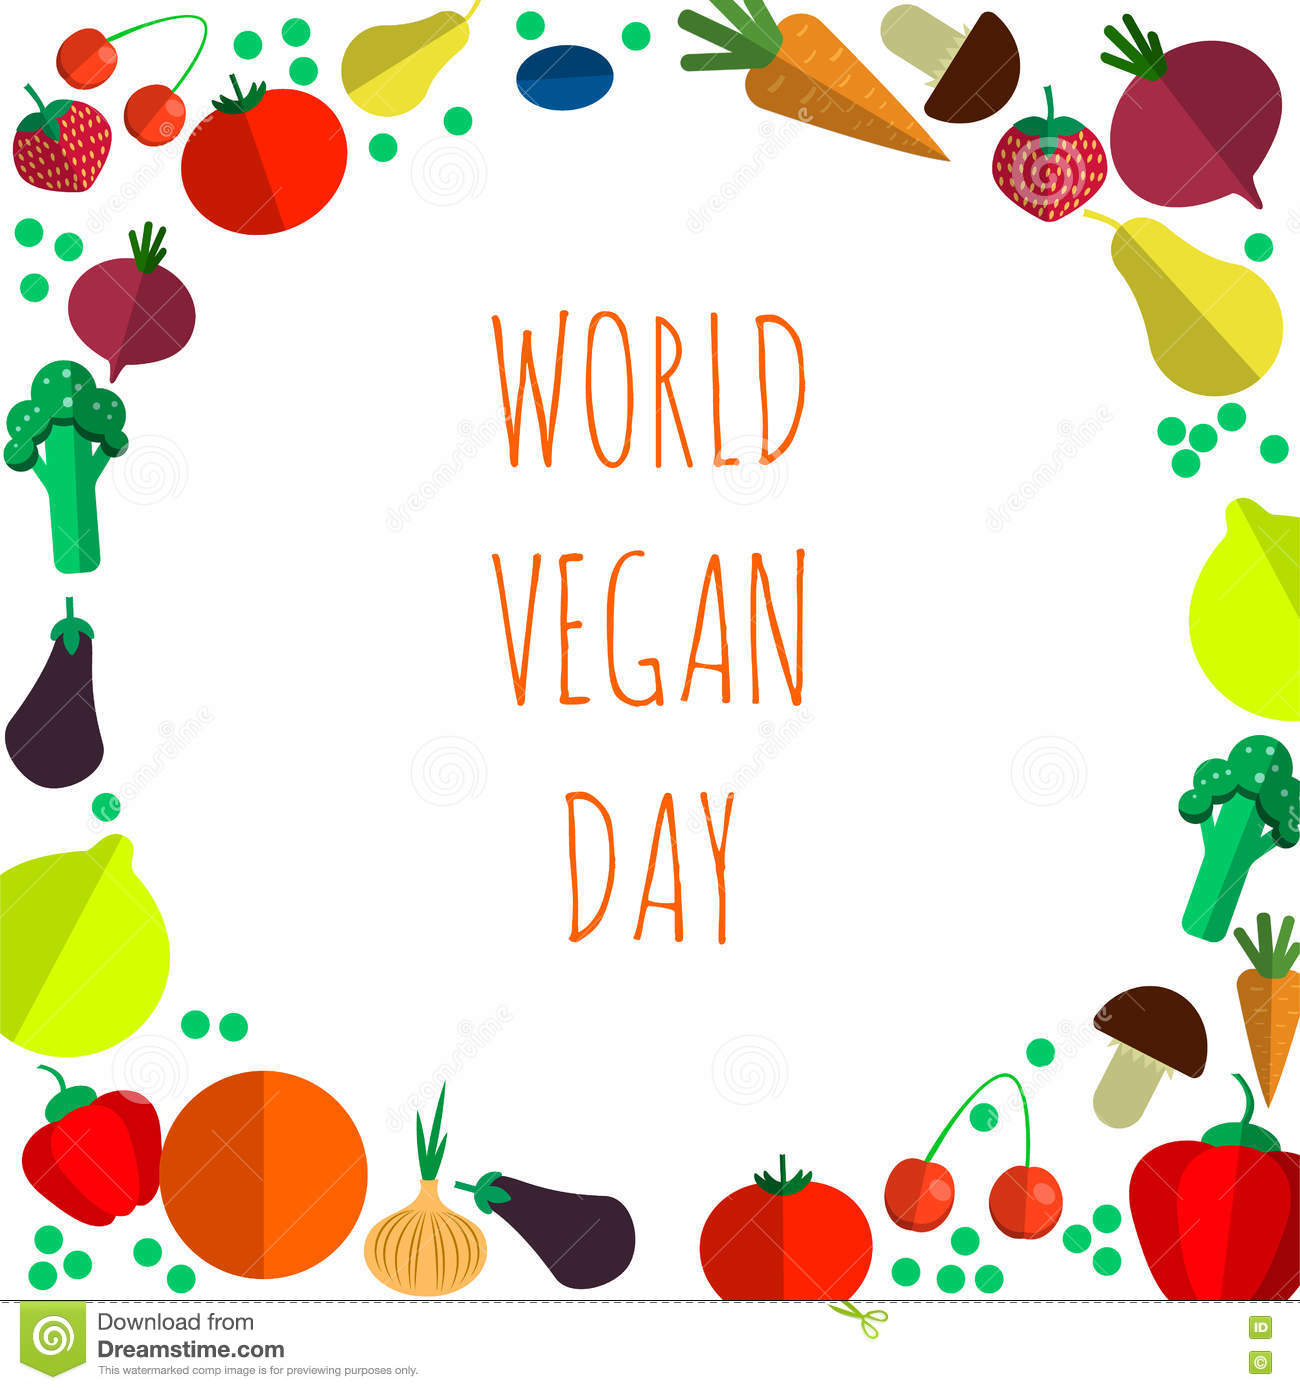 world vegan Day fruits boundary design